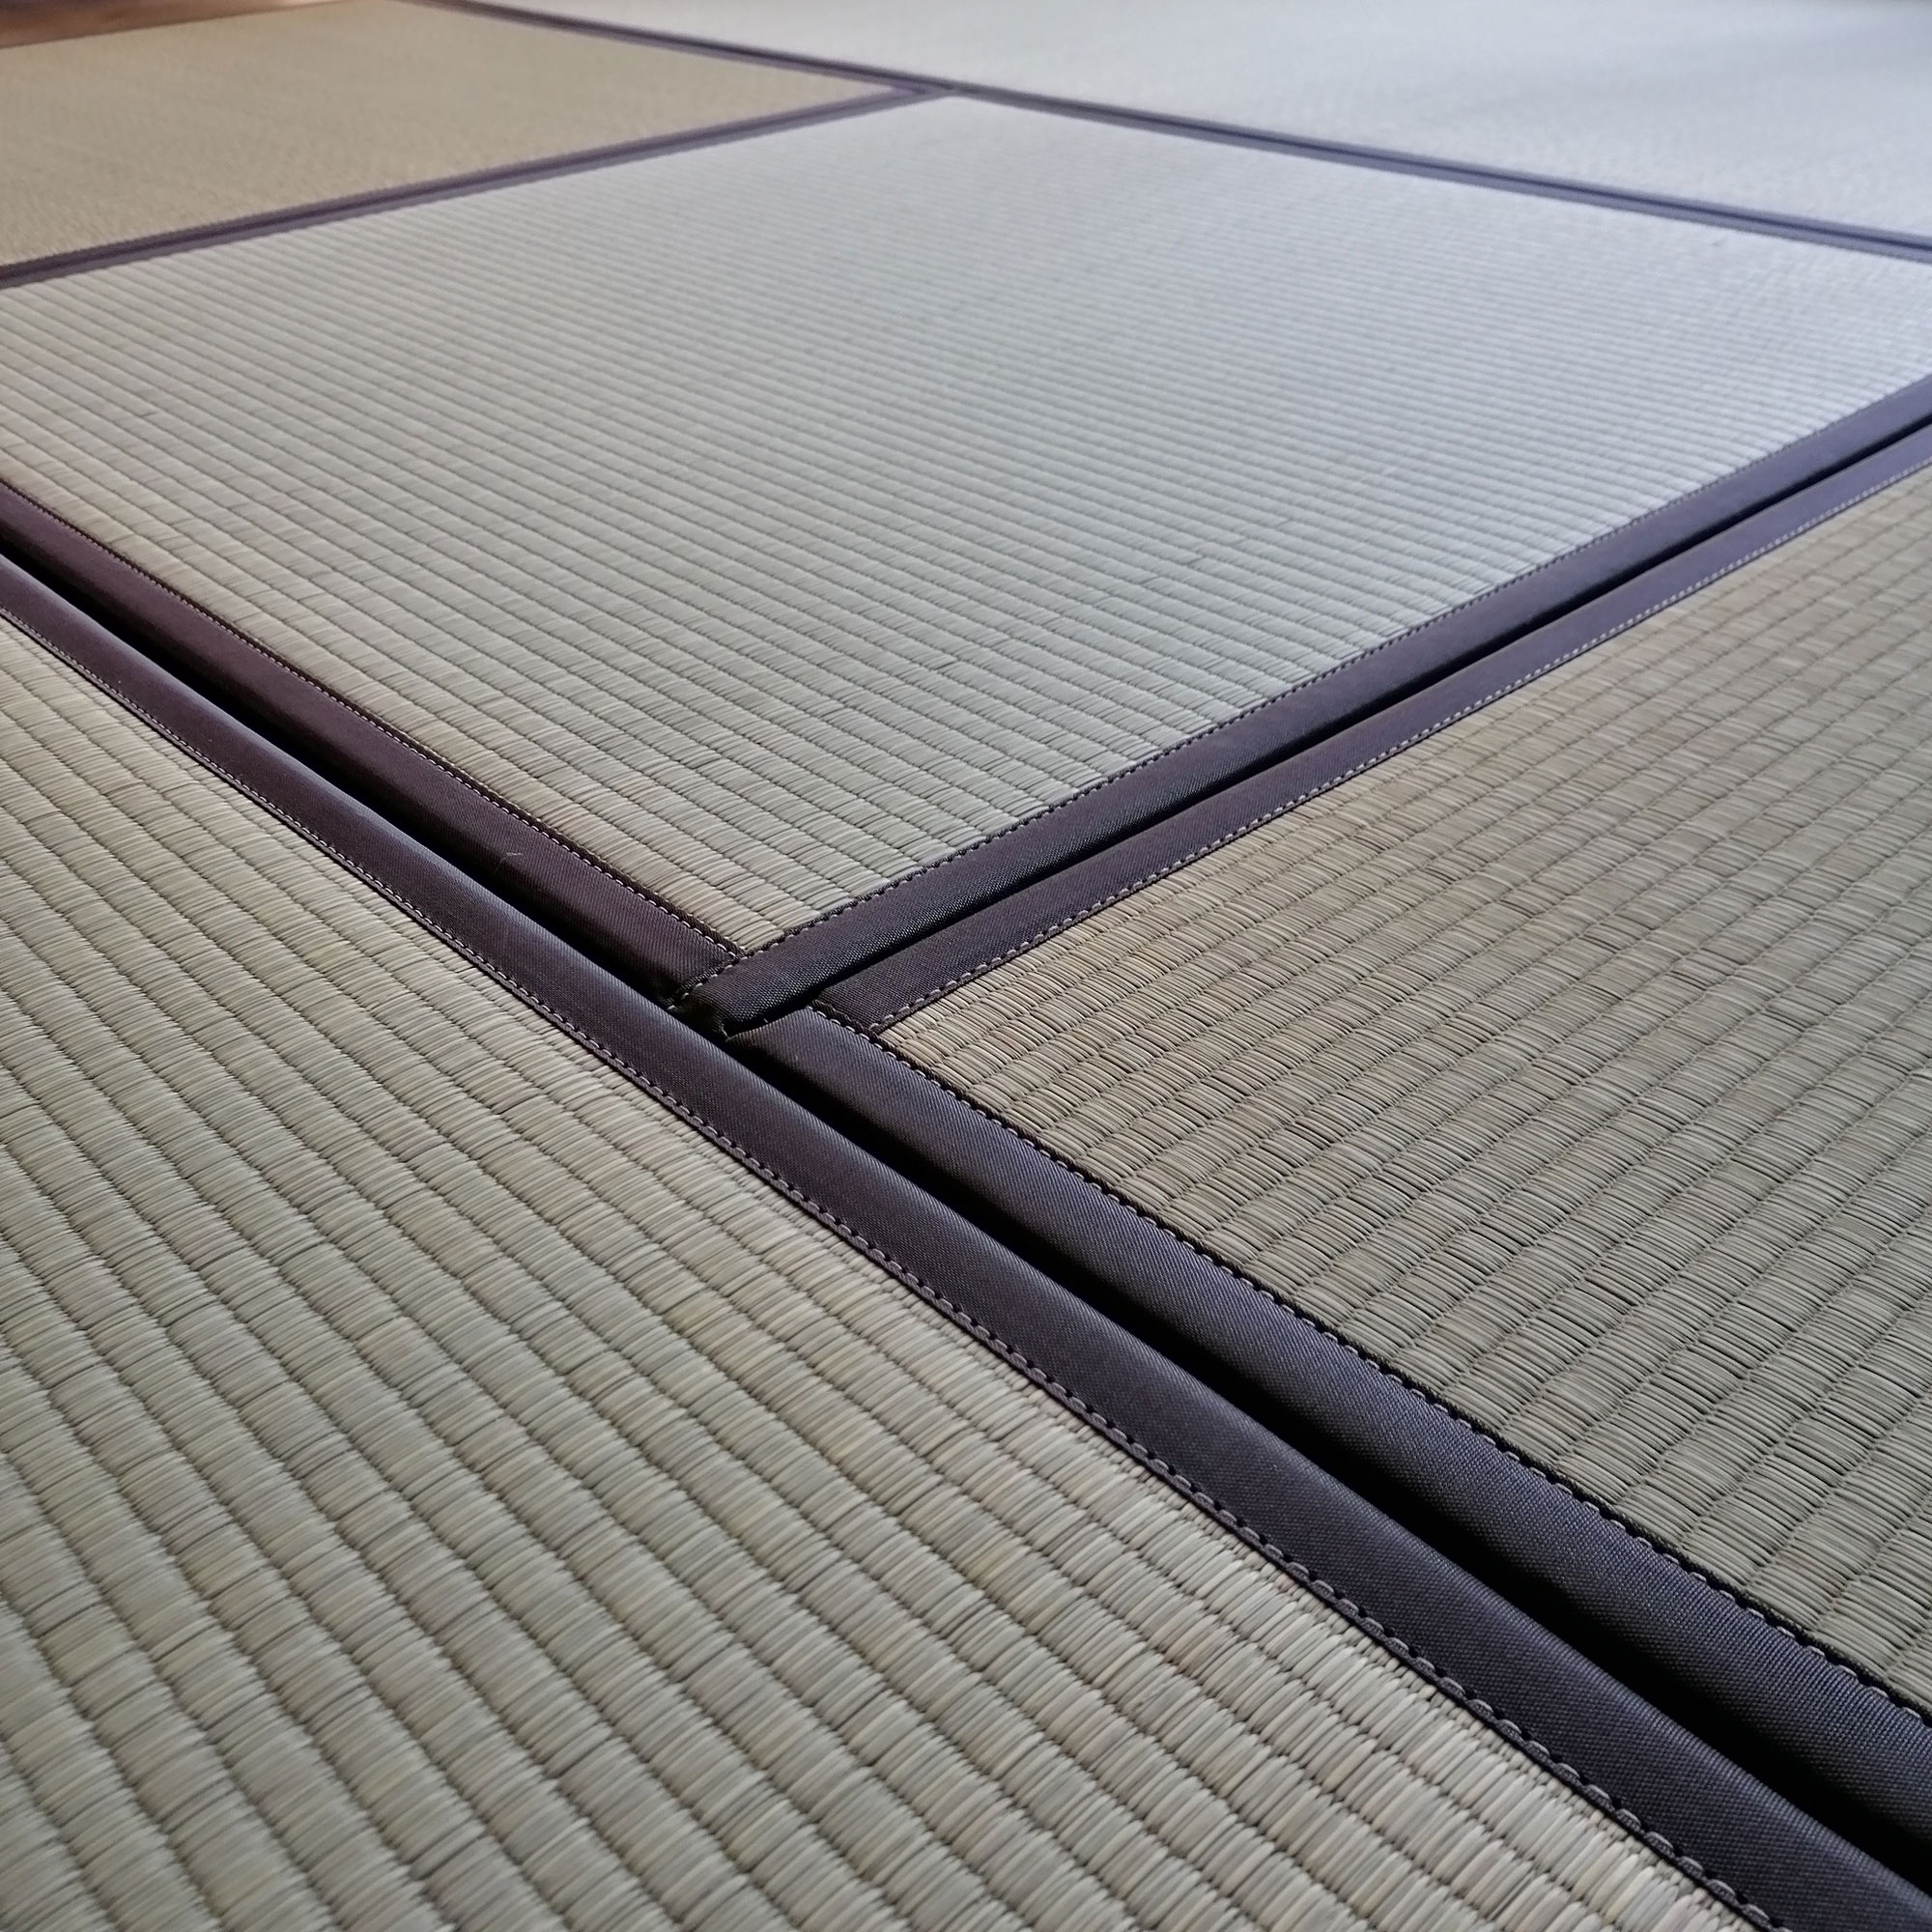 https://tokyo-market.fr/41636/japanese-traditional-tatami-rice-straw-mat-agura-164x82cm.jpg